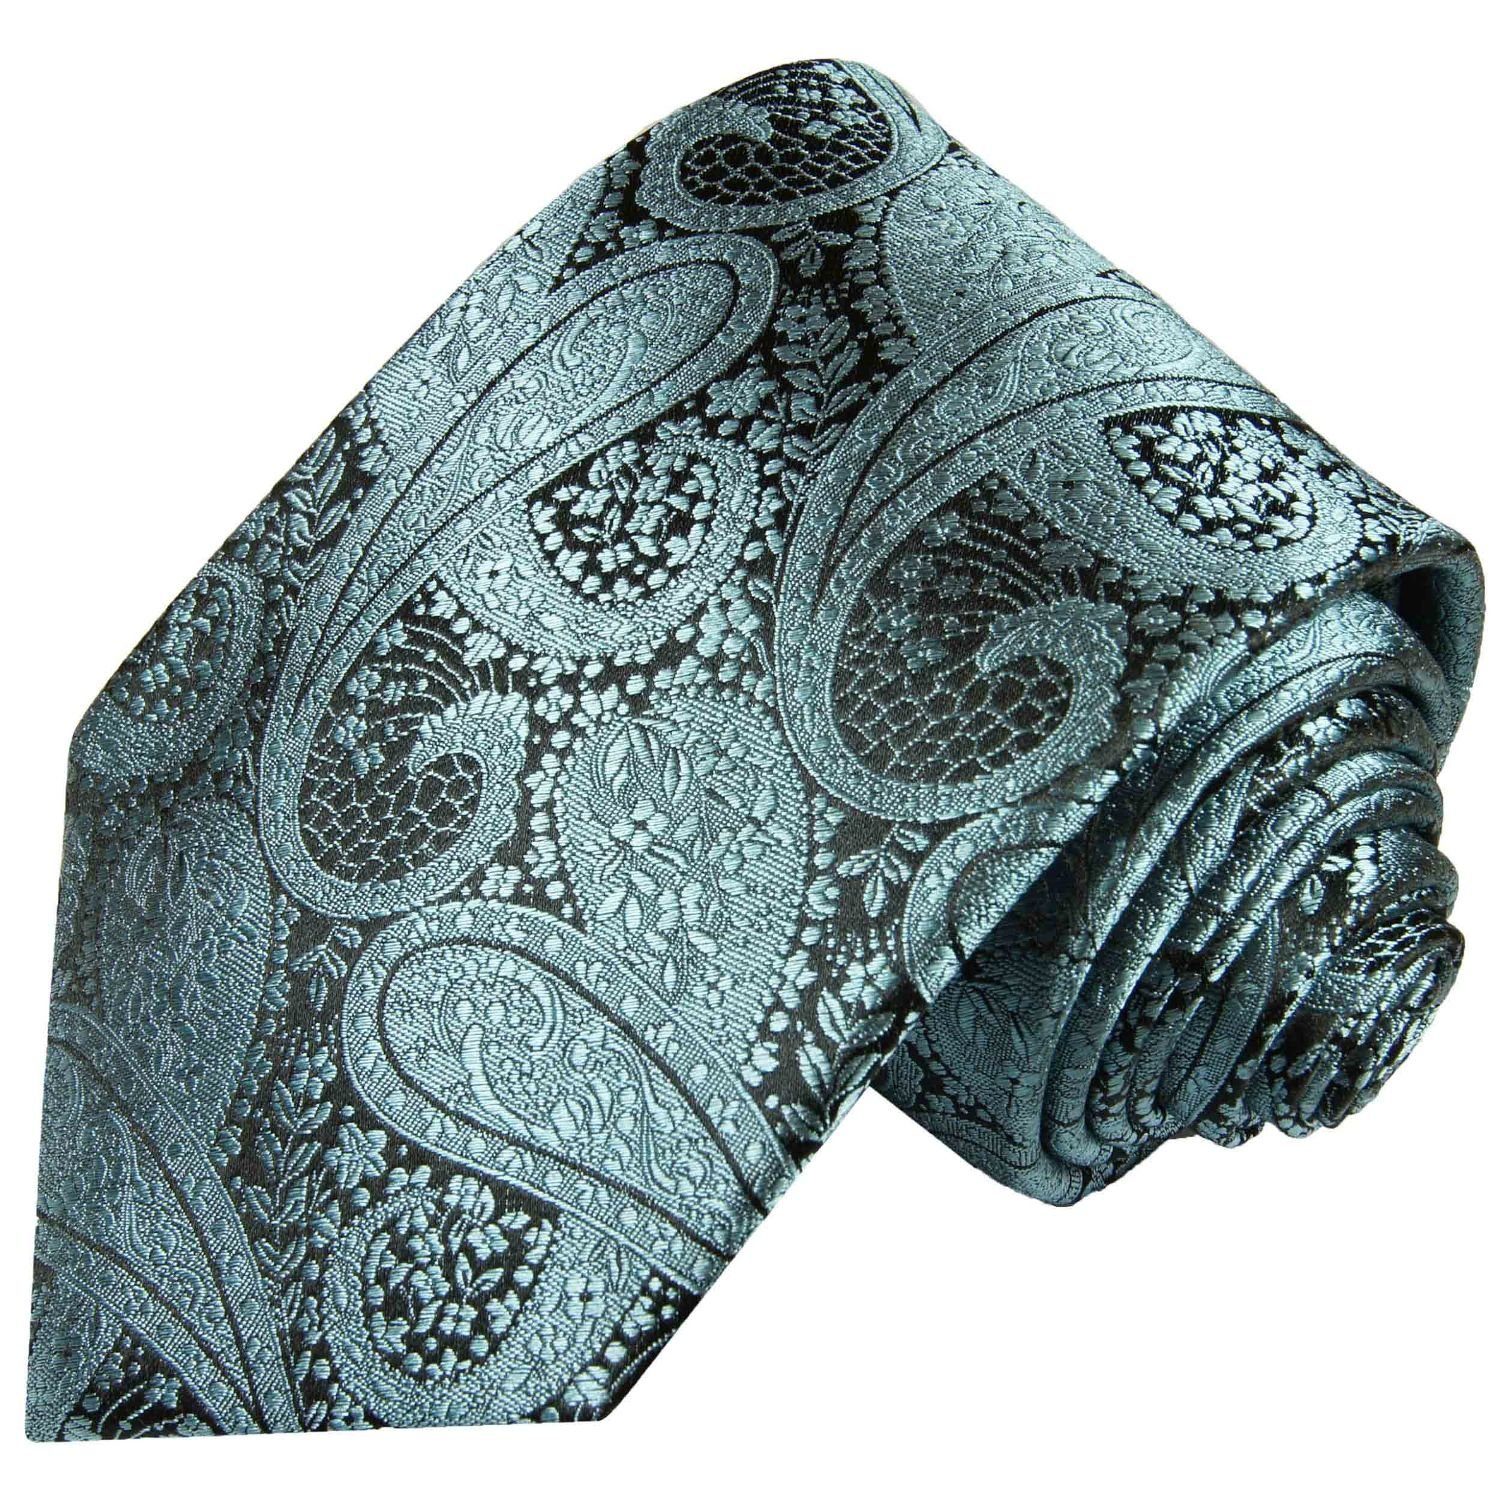 Paul Malone Krawatte Elegante Seidenkrawatte Herren Schlips paisley brokat 100% Seide Schmal (6cm), türkis schwarz 590